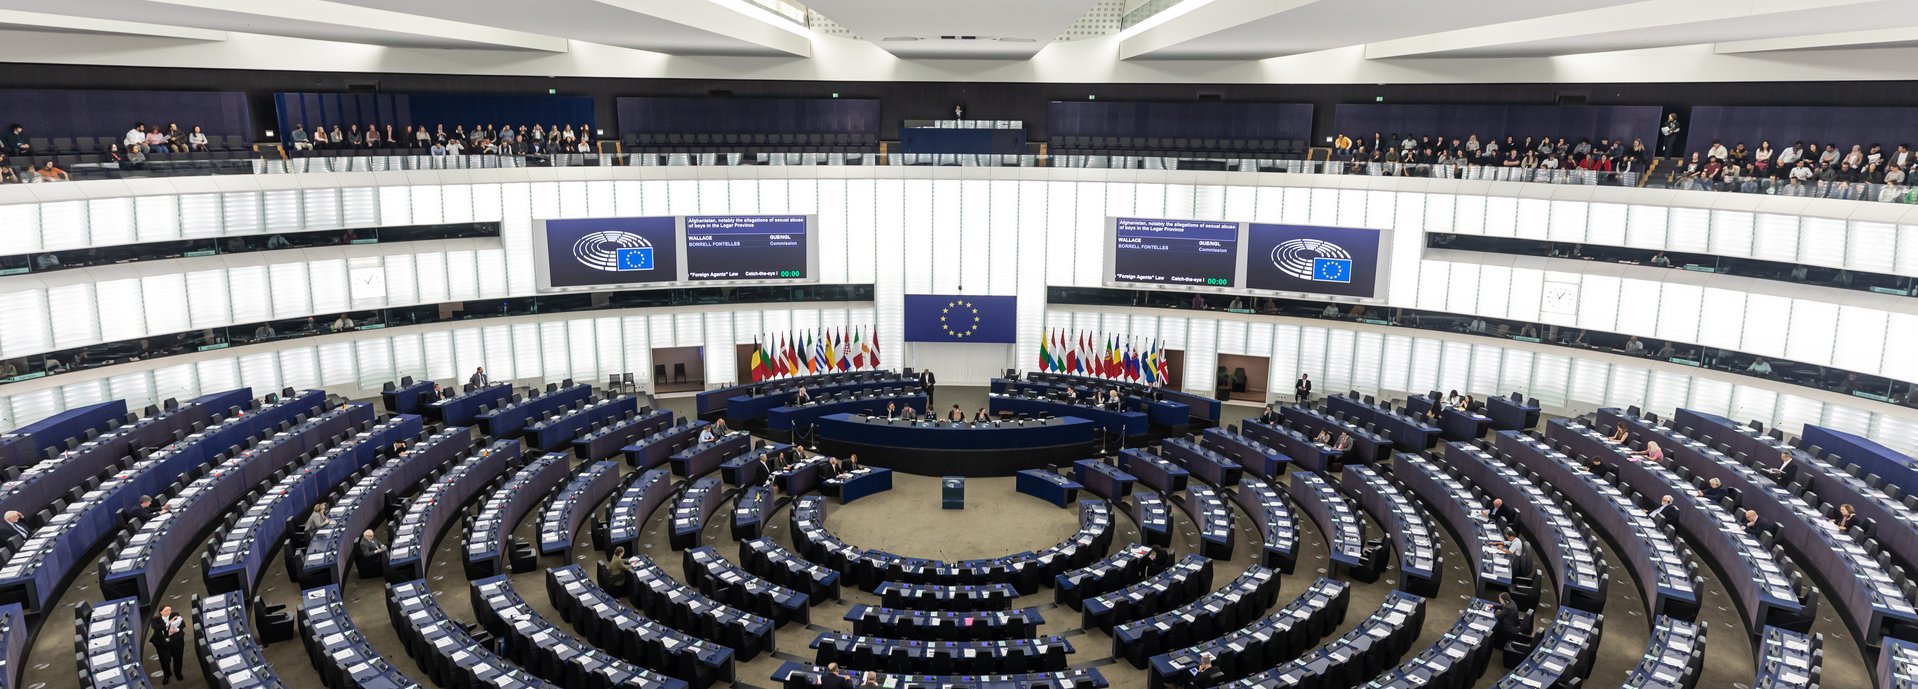 Plenarsaal des Europäischen Parlaments 2019